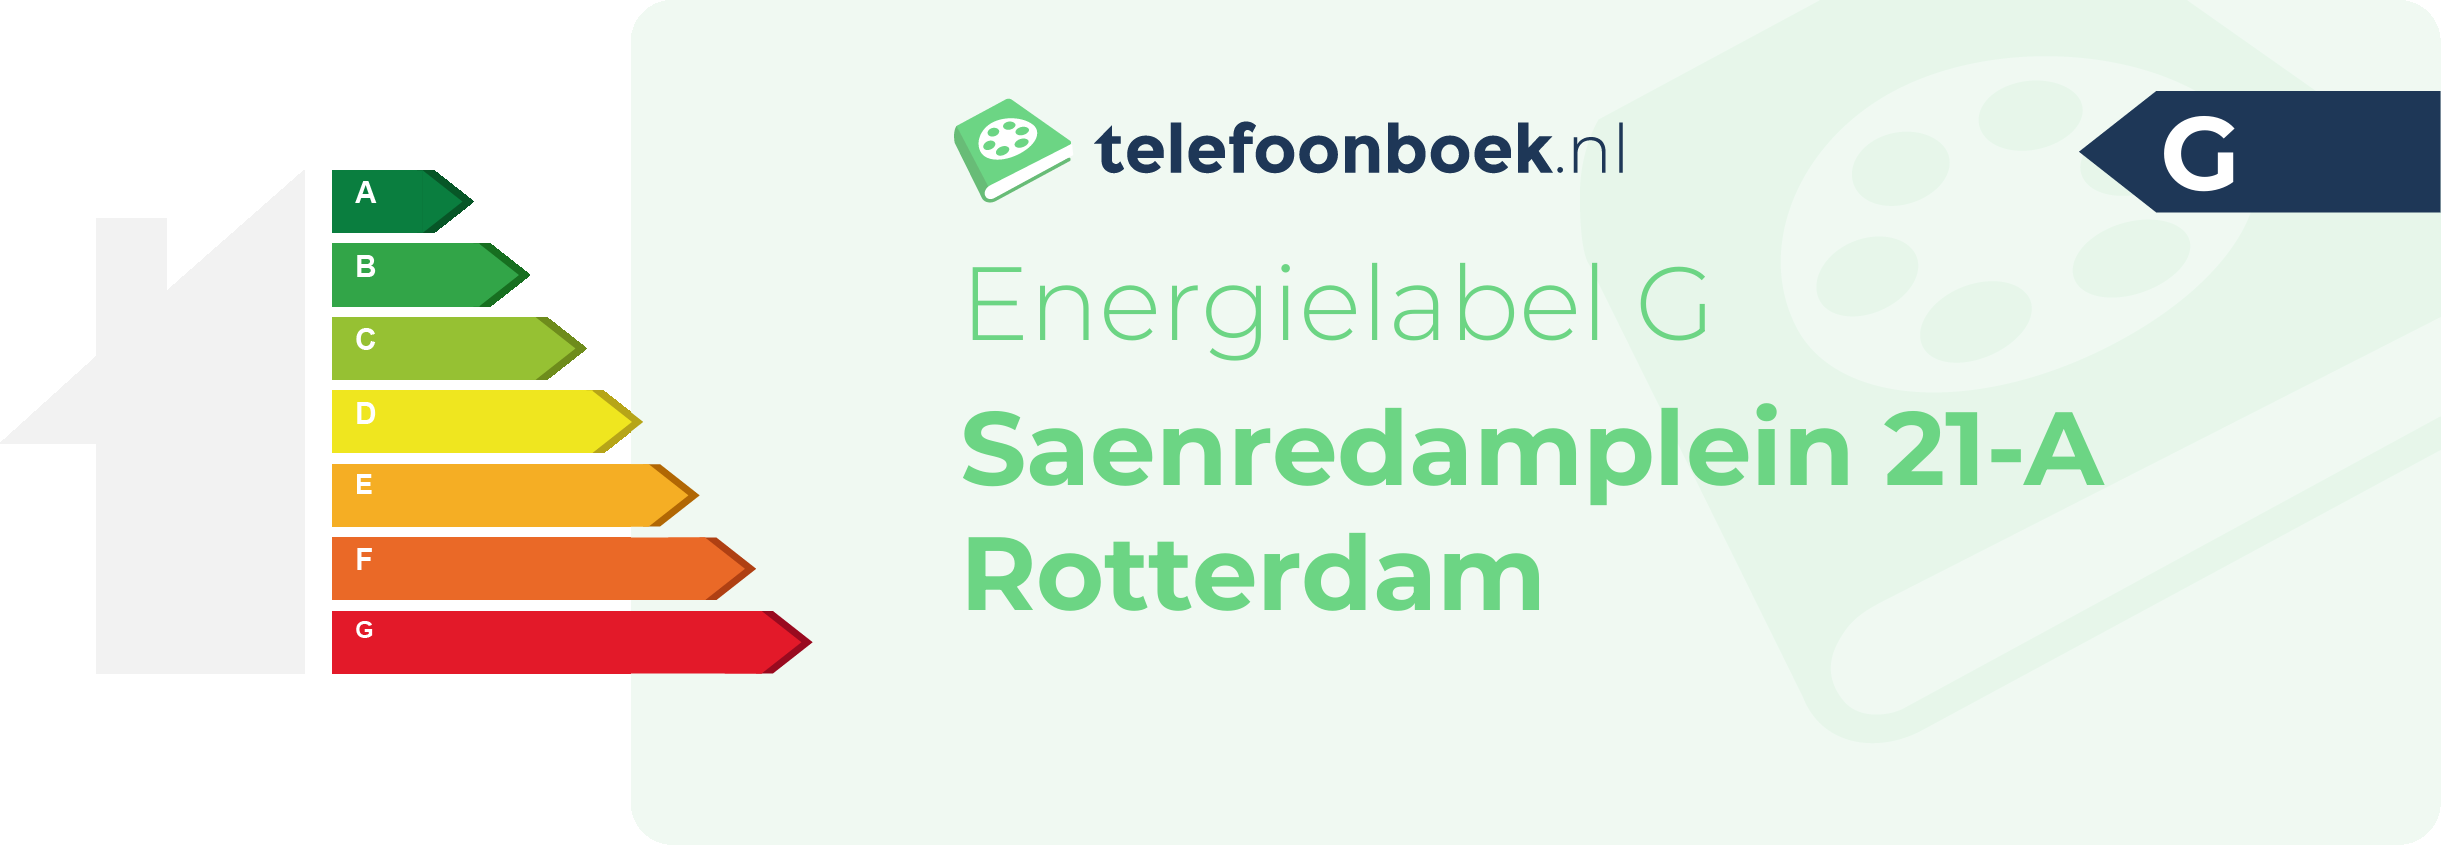 Energielabel Saenredamplein 21-A Rotterdam